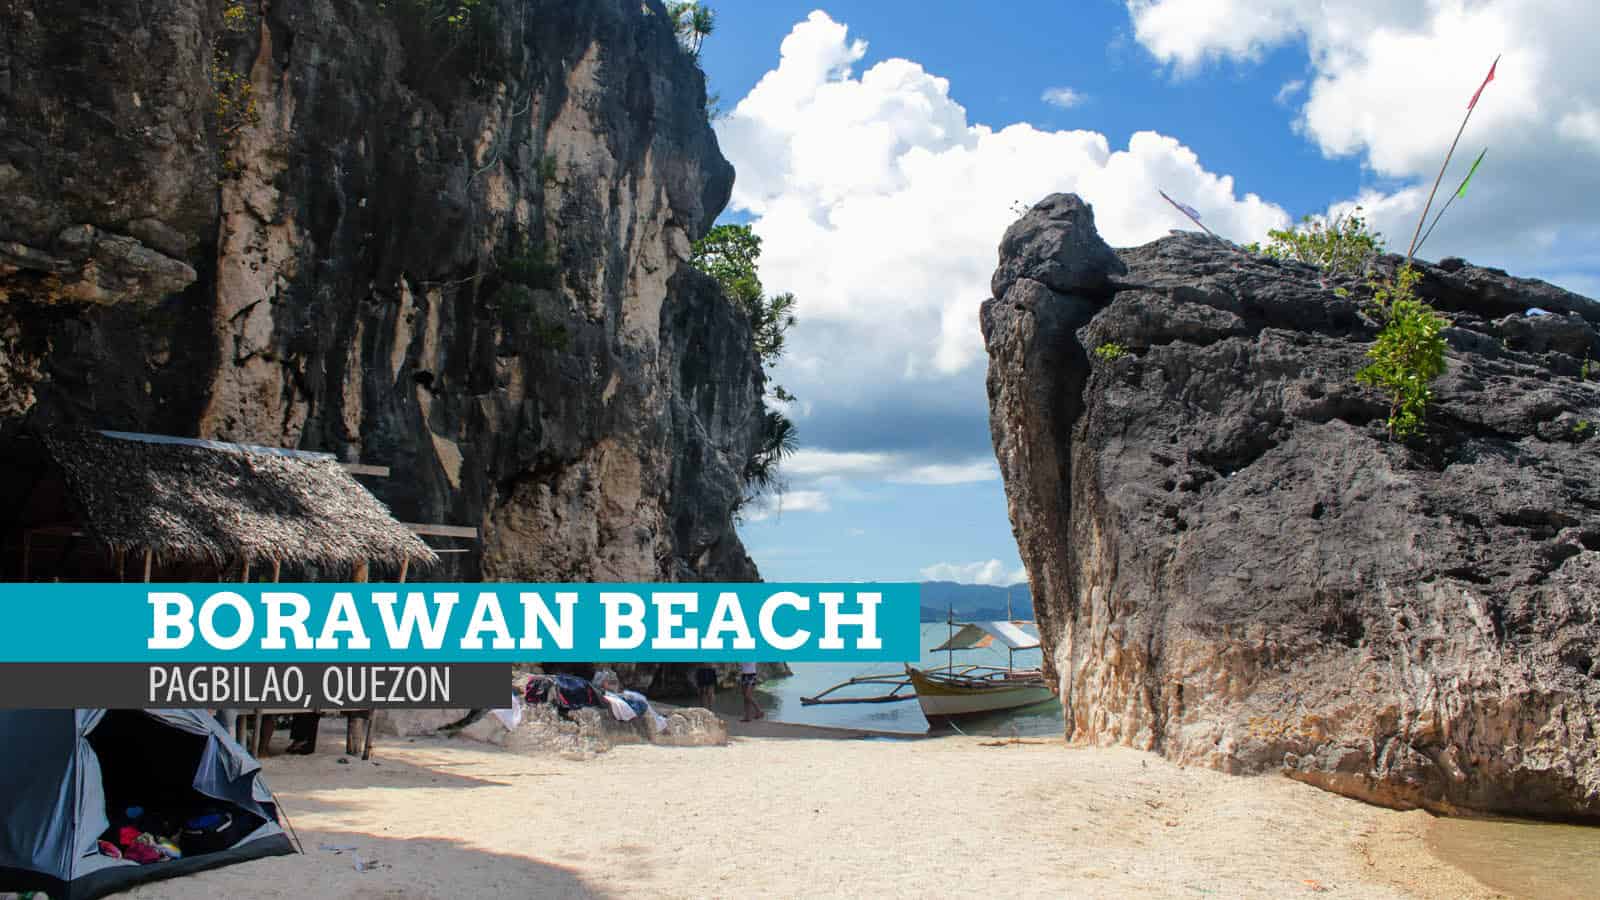 Borawan Beach in Pagbilao, Quezon